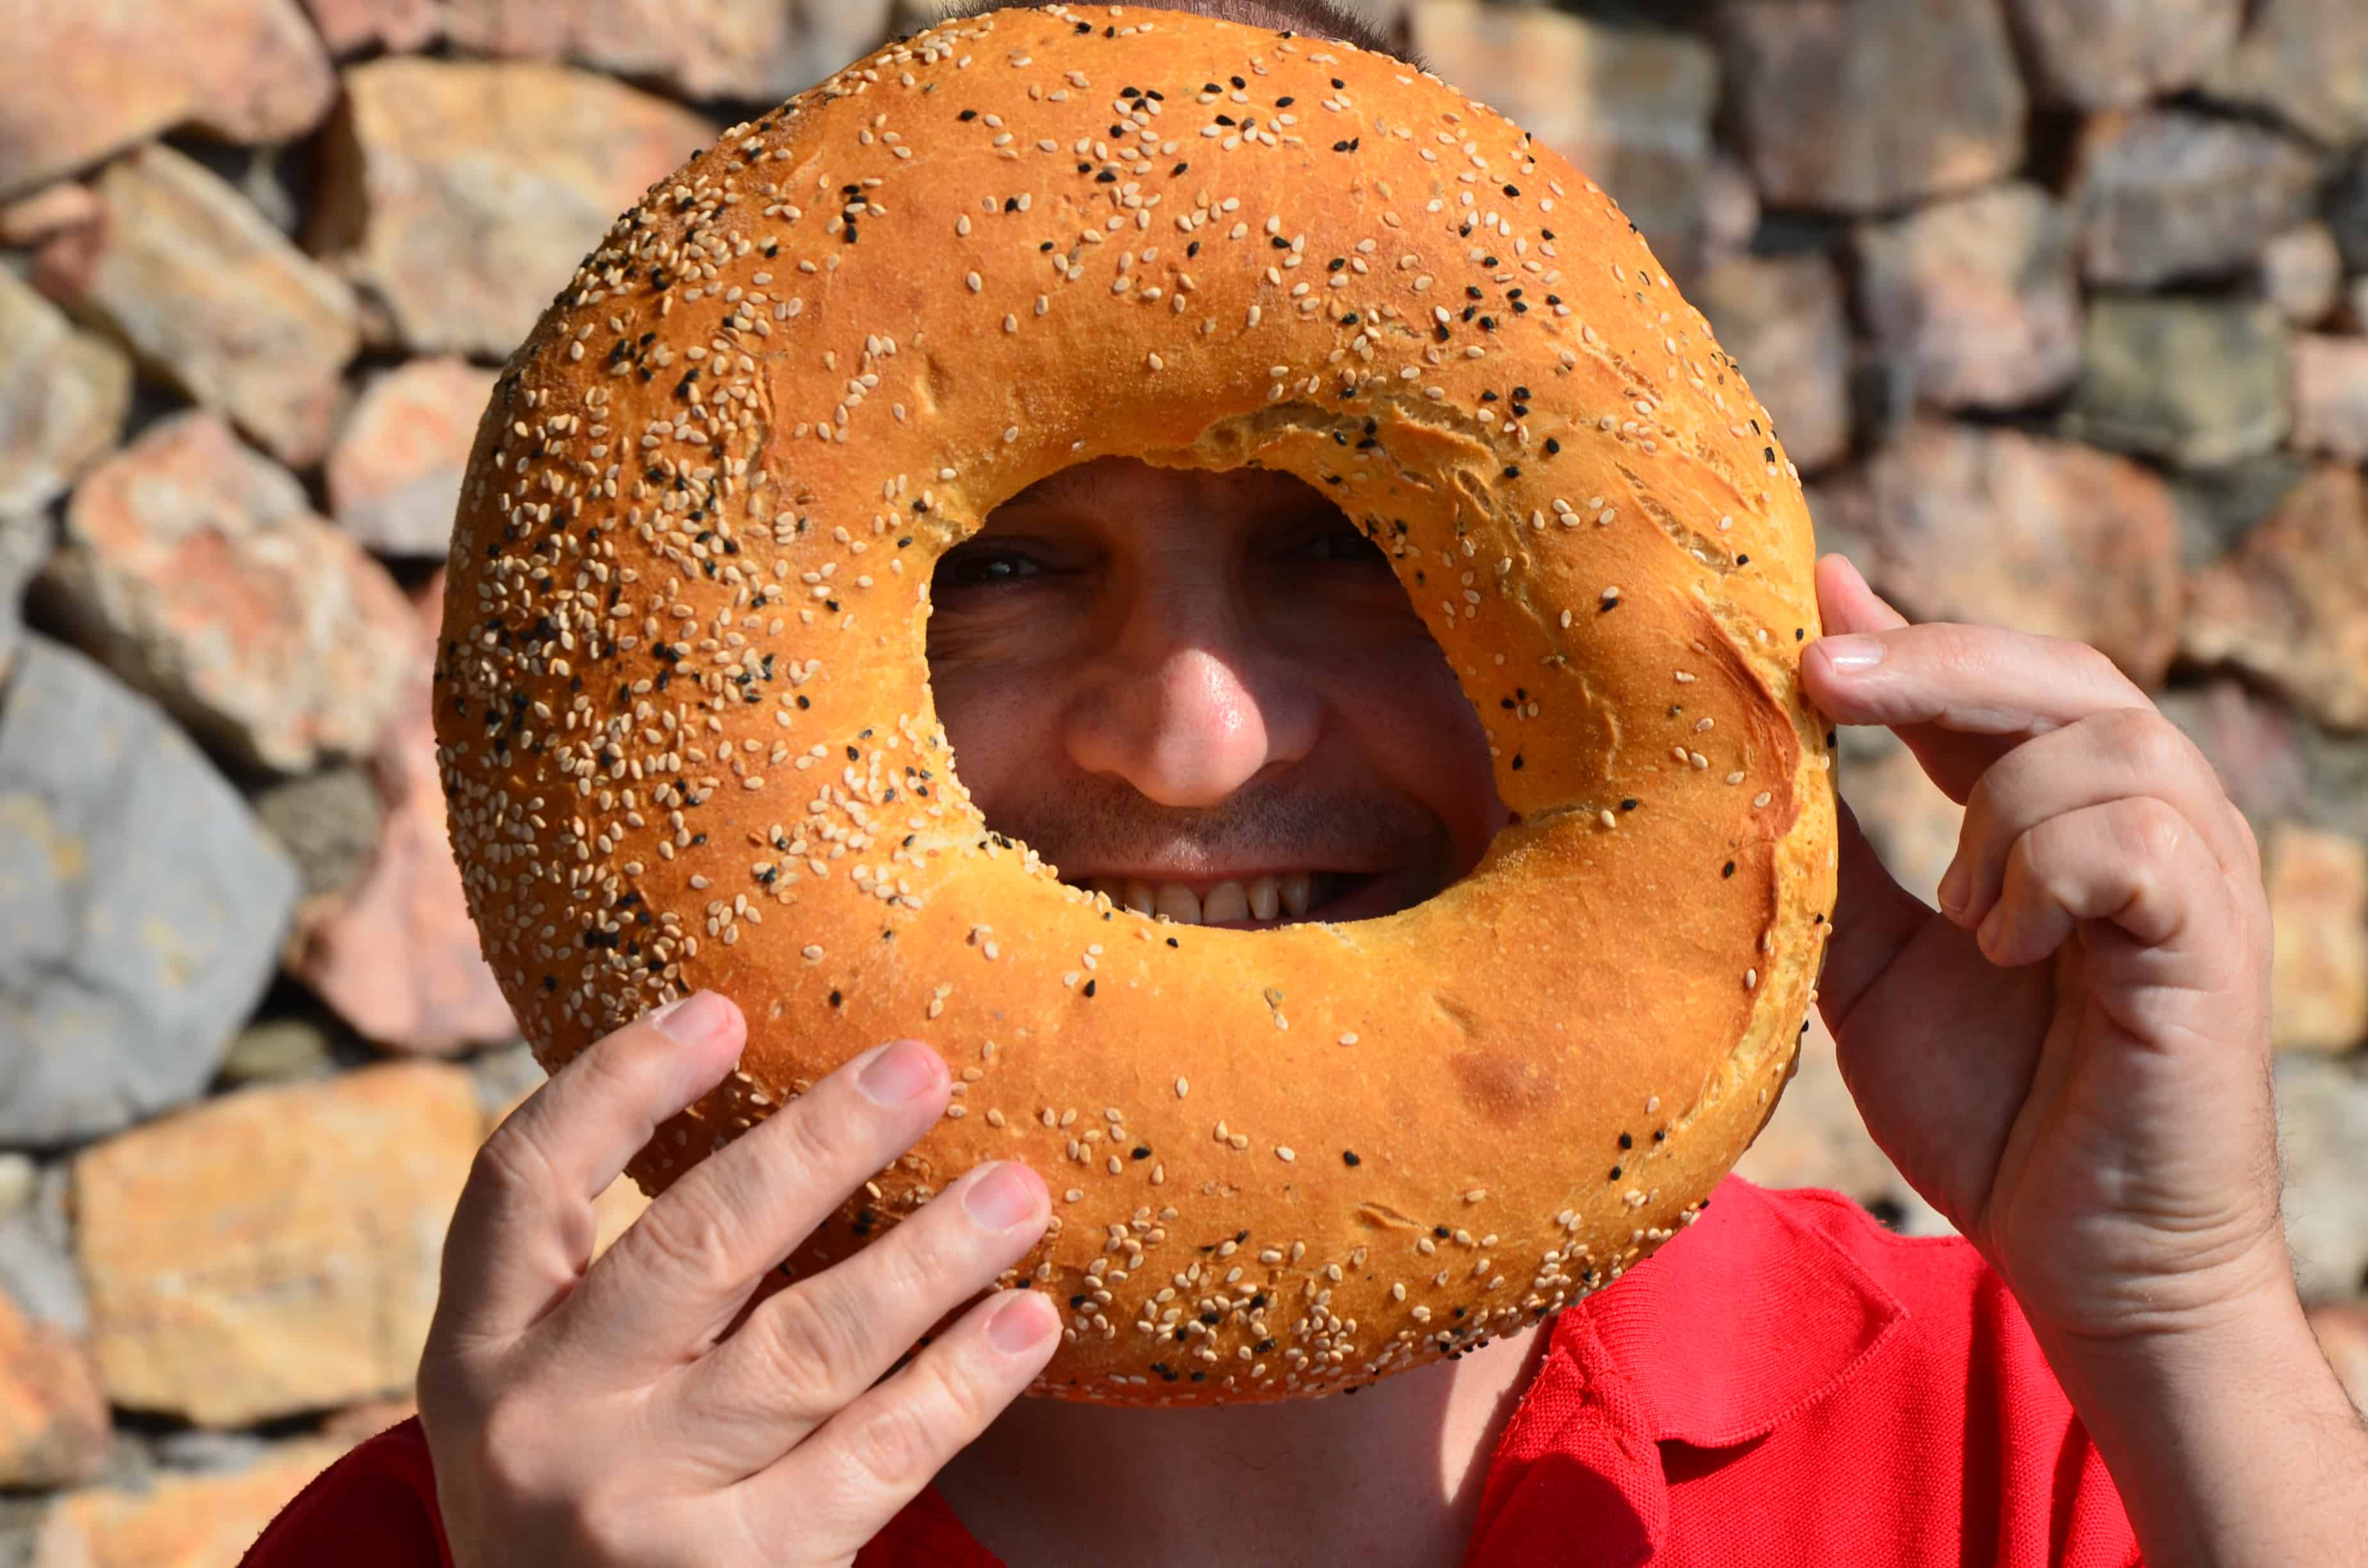 Martin having fun with the bread at Ovabükü, Datça, Turkey